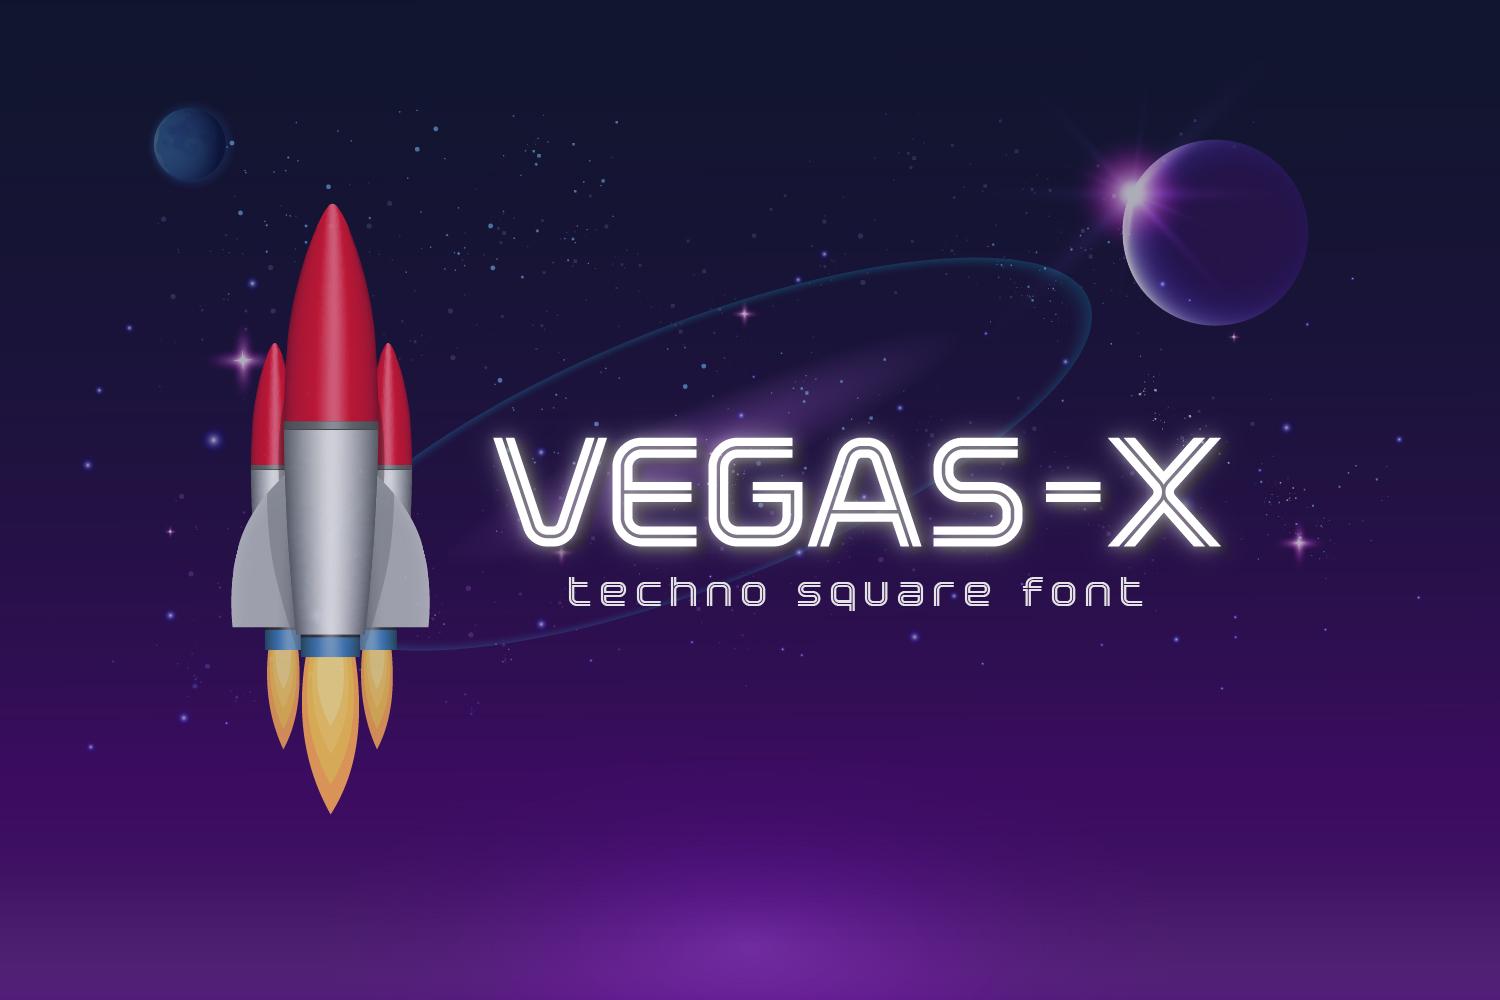 Vegas-X Font